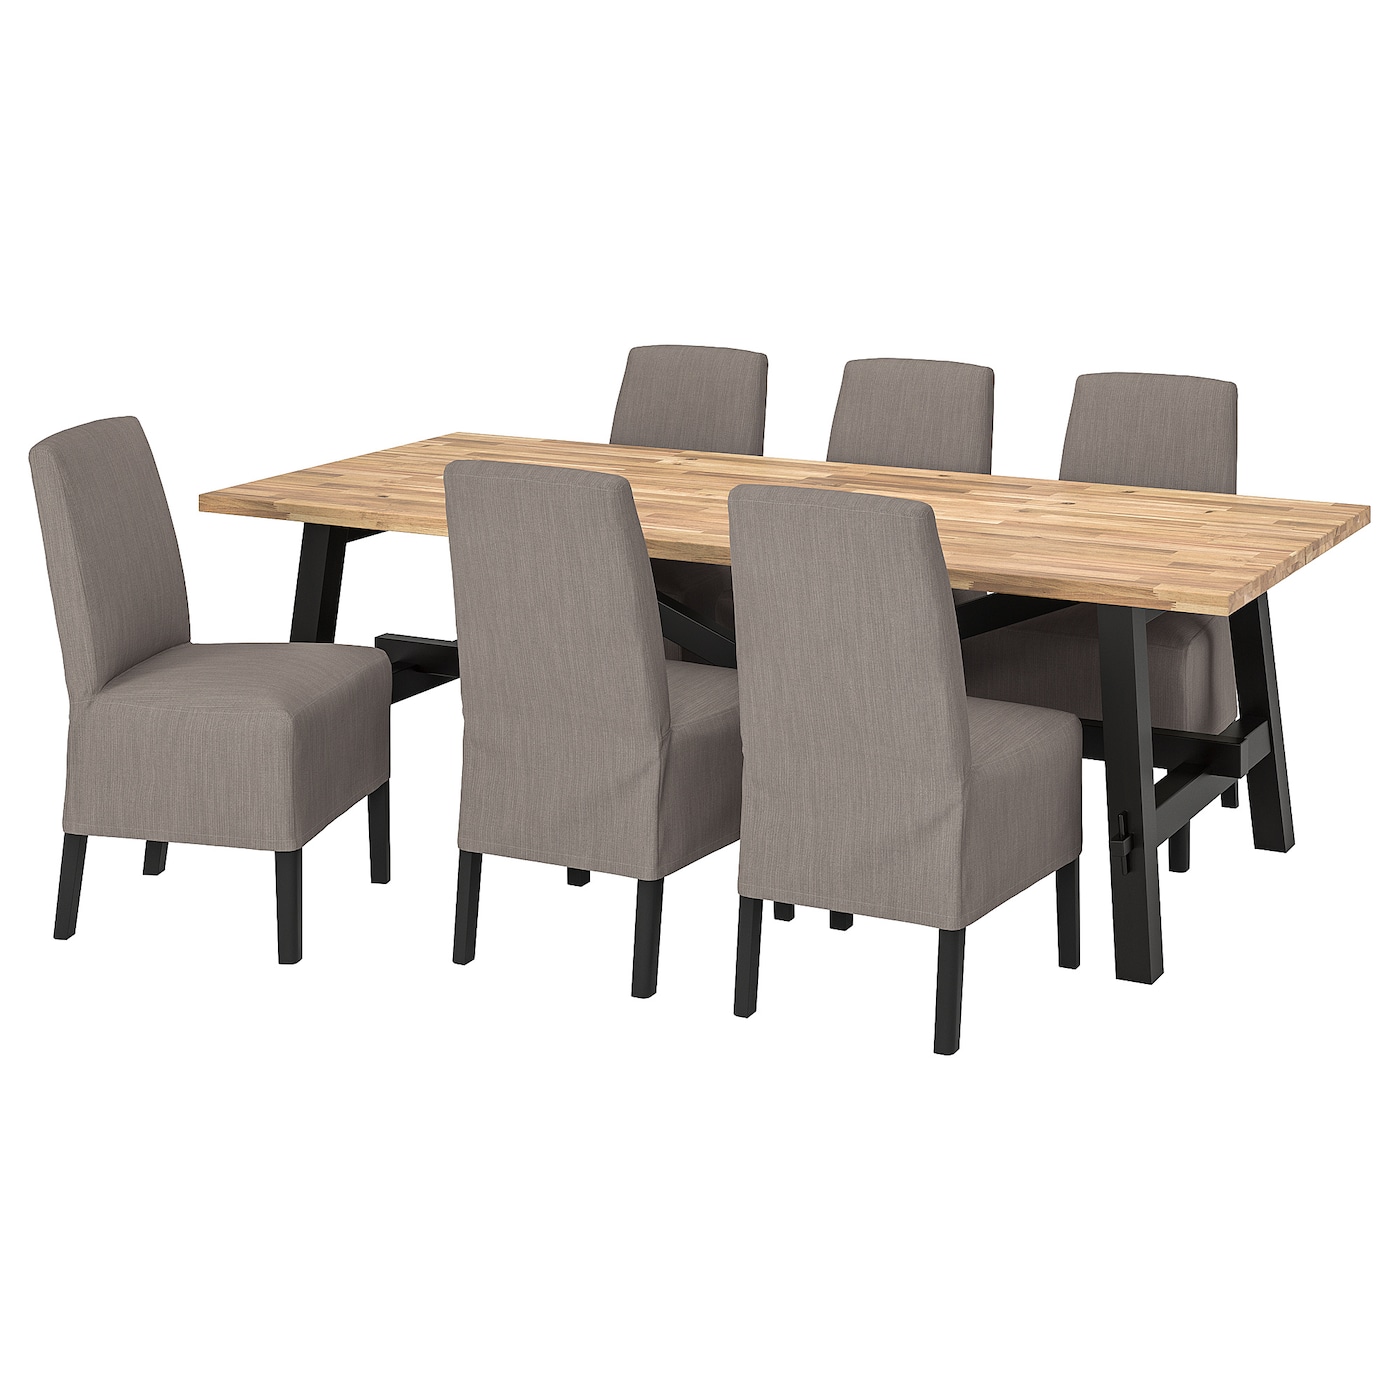 Стол+6 стульев - SKOGSTA / BERGMUND IKEA/ СКОГСТА/БЕРГМУНД ИКЕА, 235х100 см, серый/коричневый